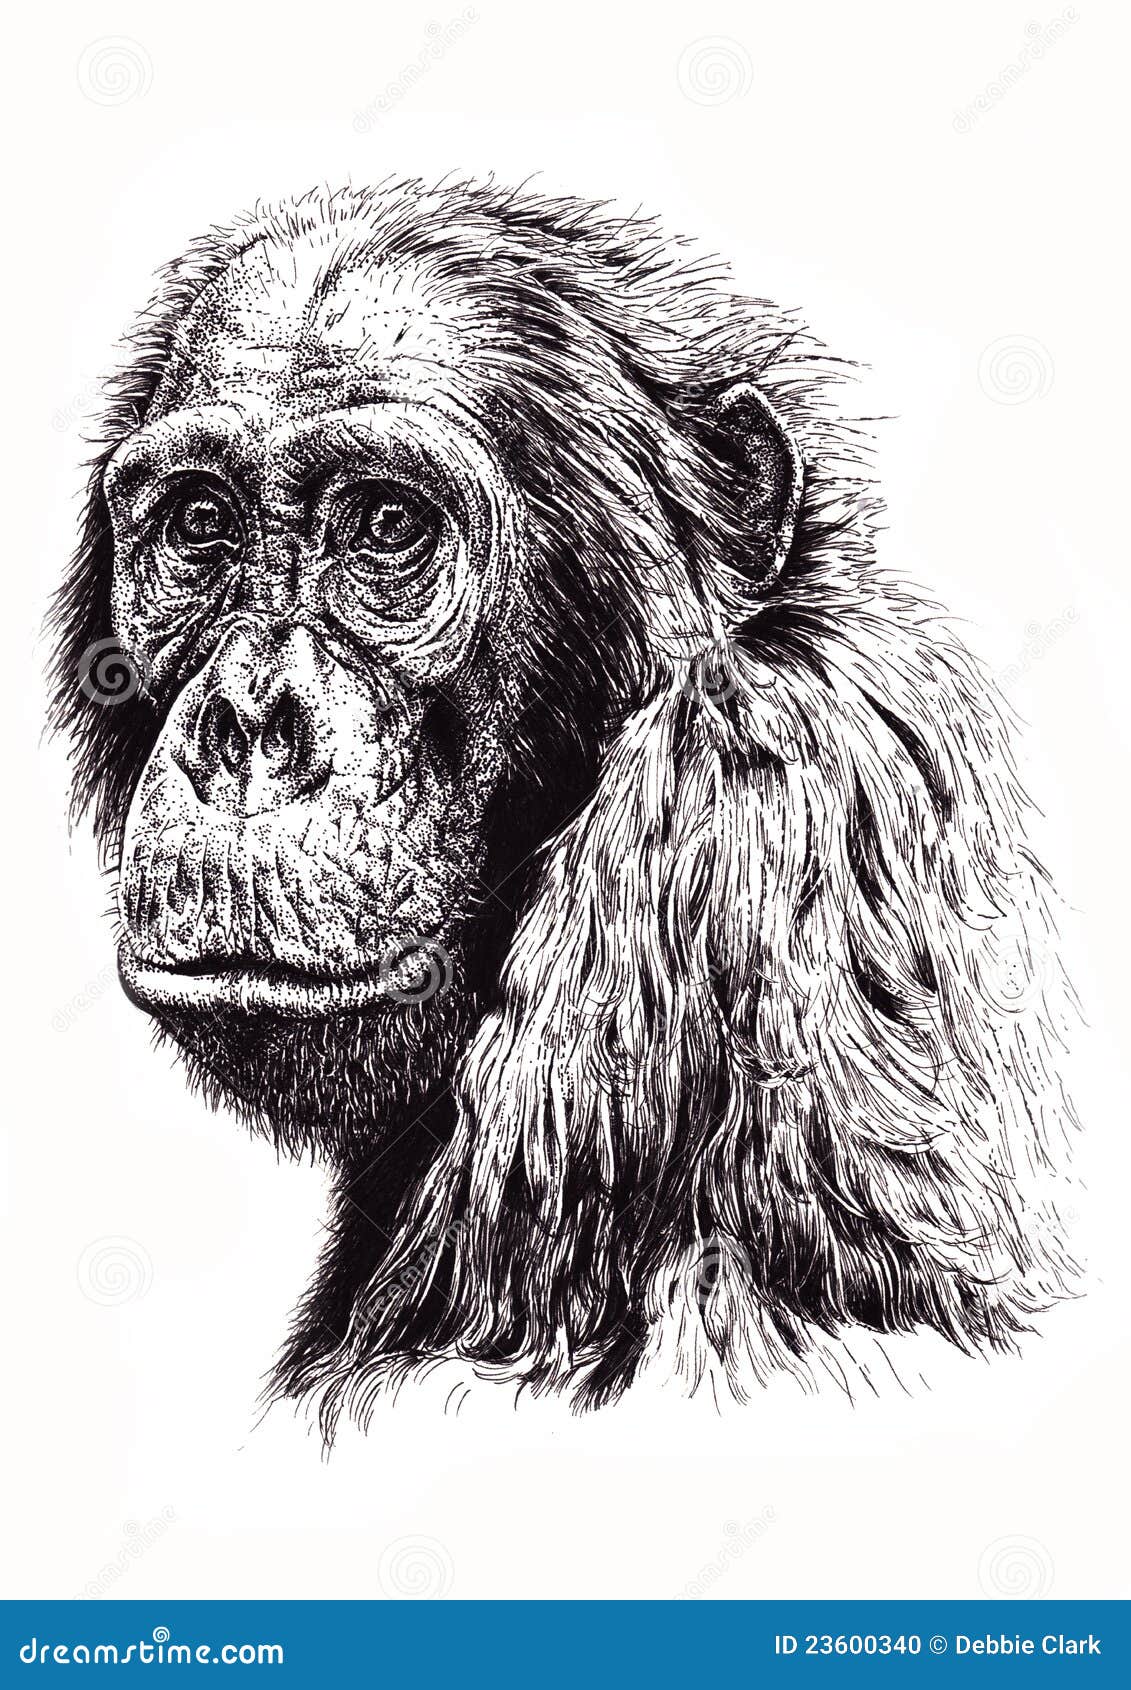 artistic sketch of ape